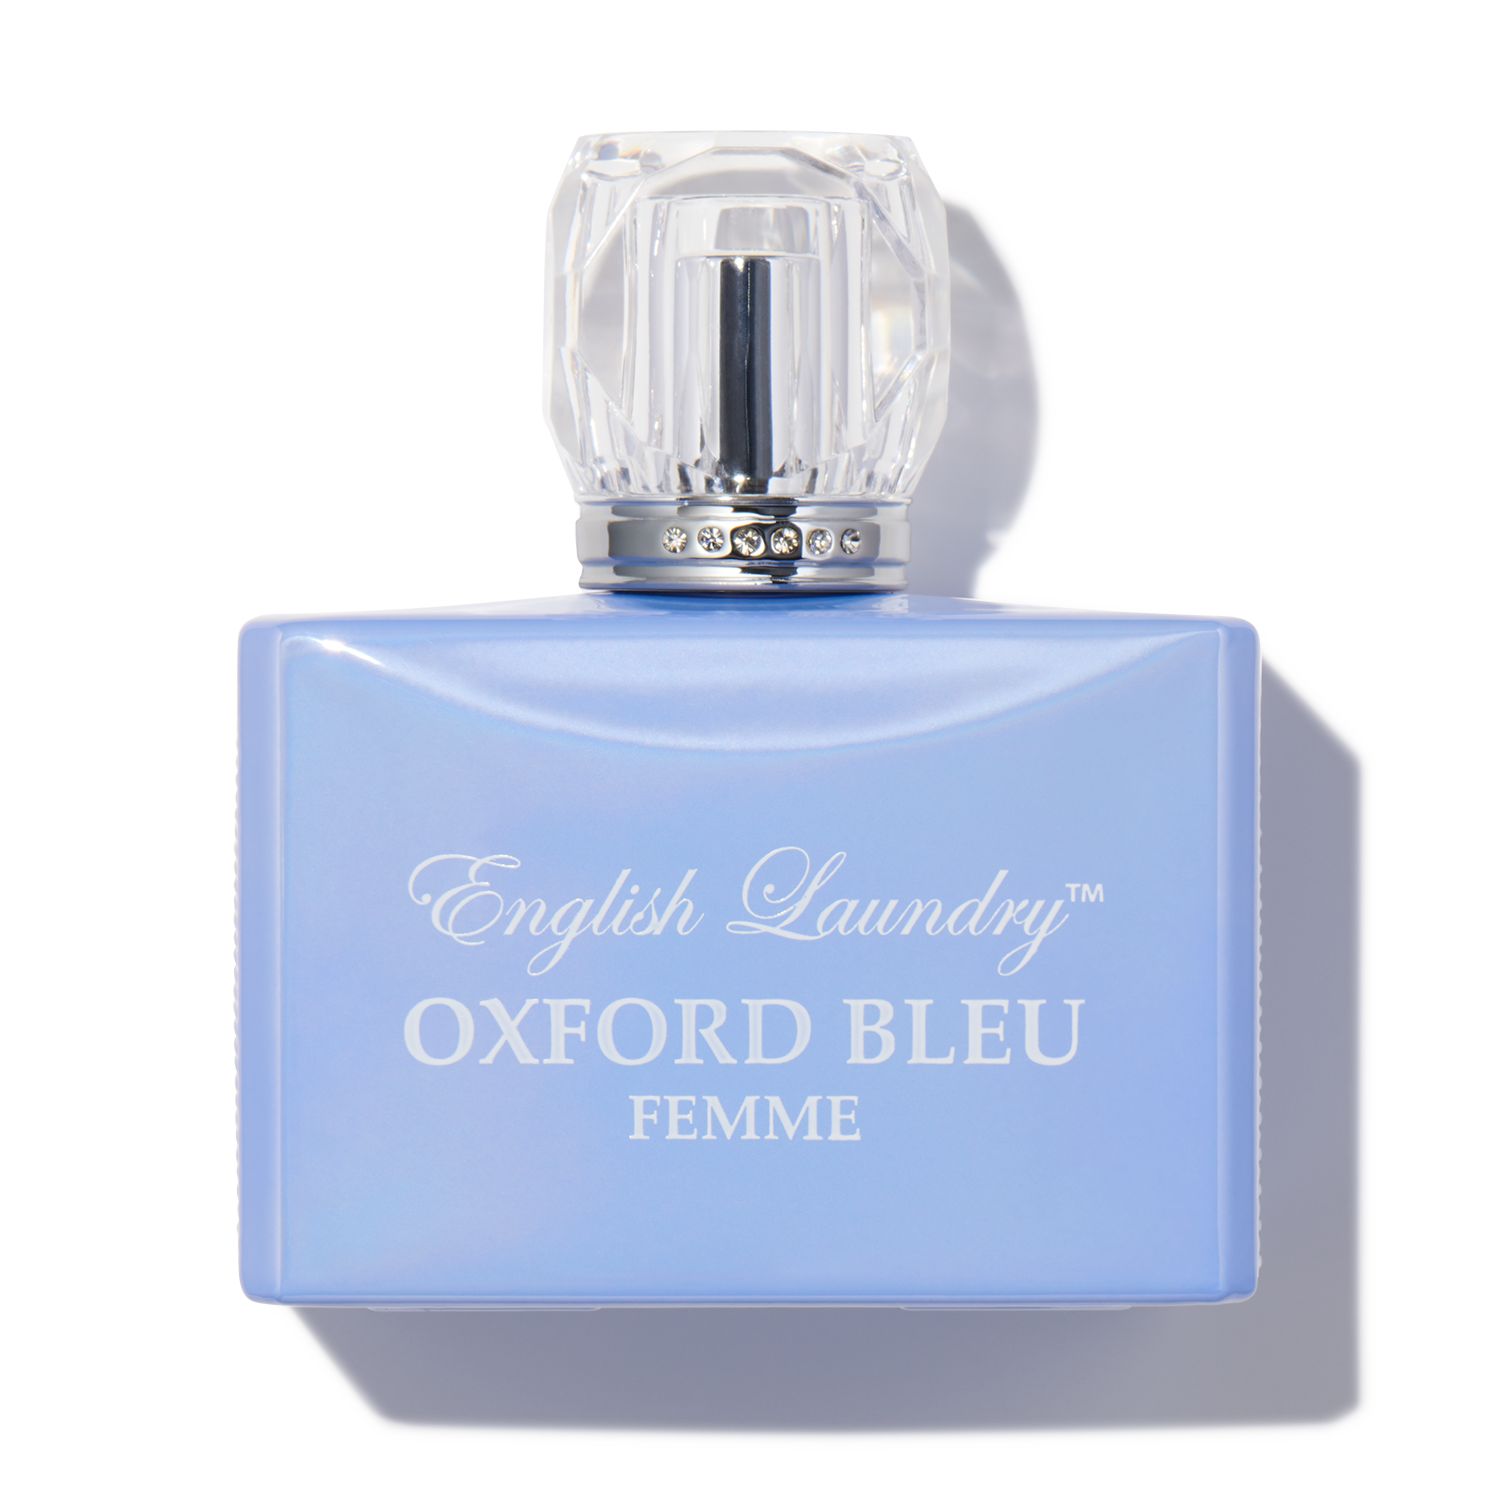  English Laundry Oxford Bleu Femme Eau de Parfum Spray